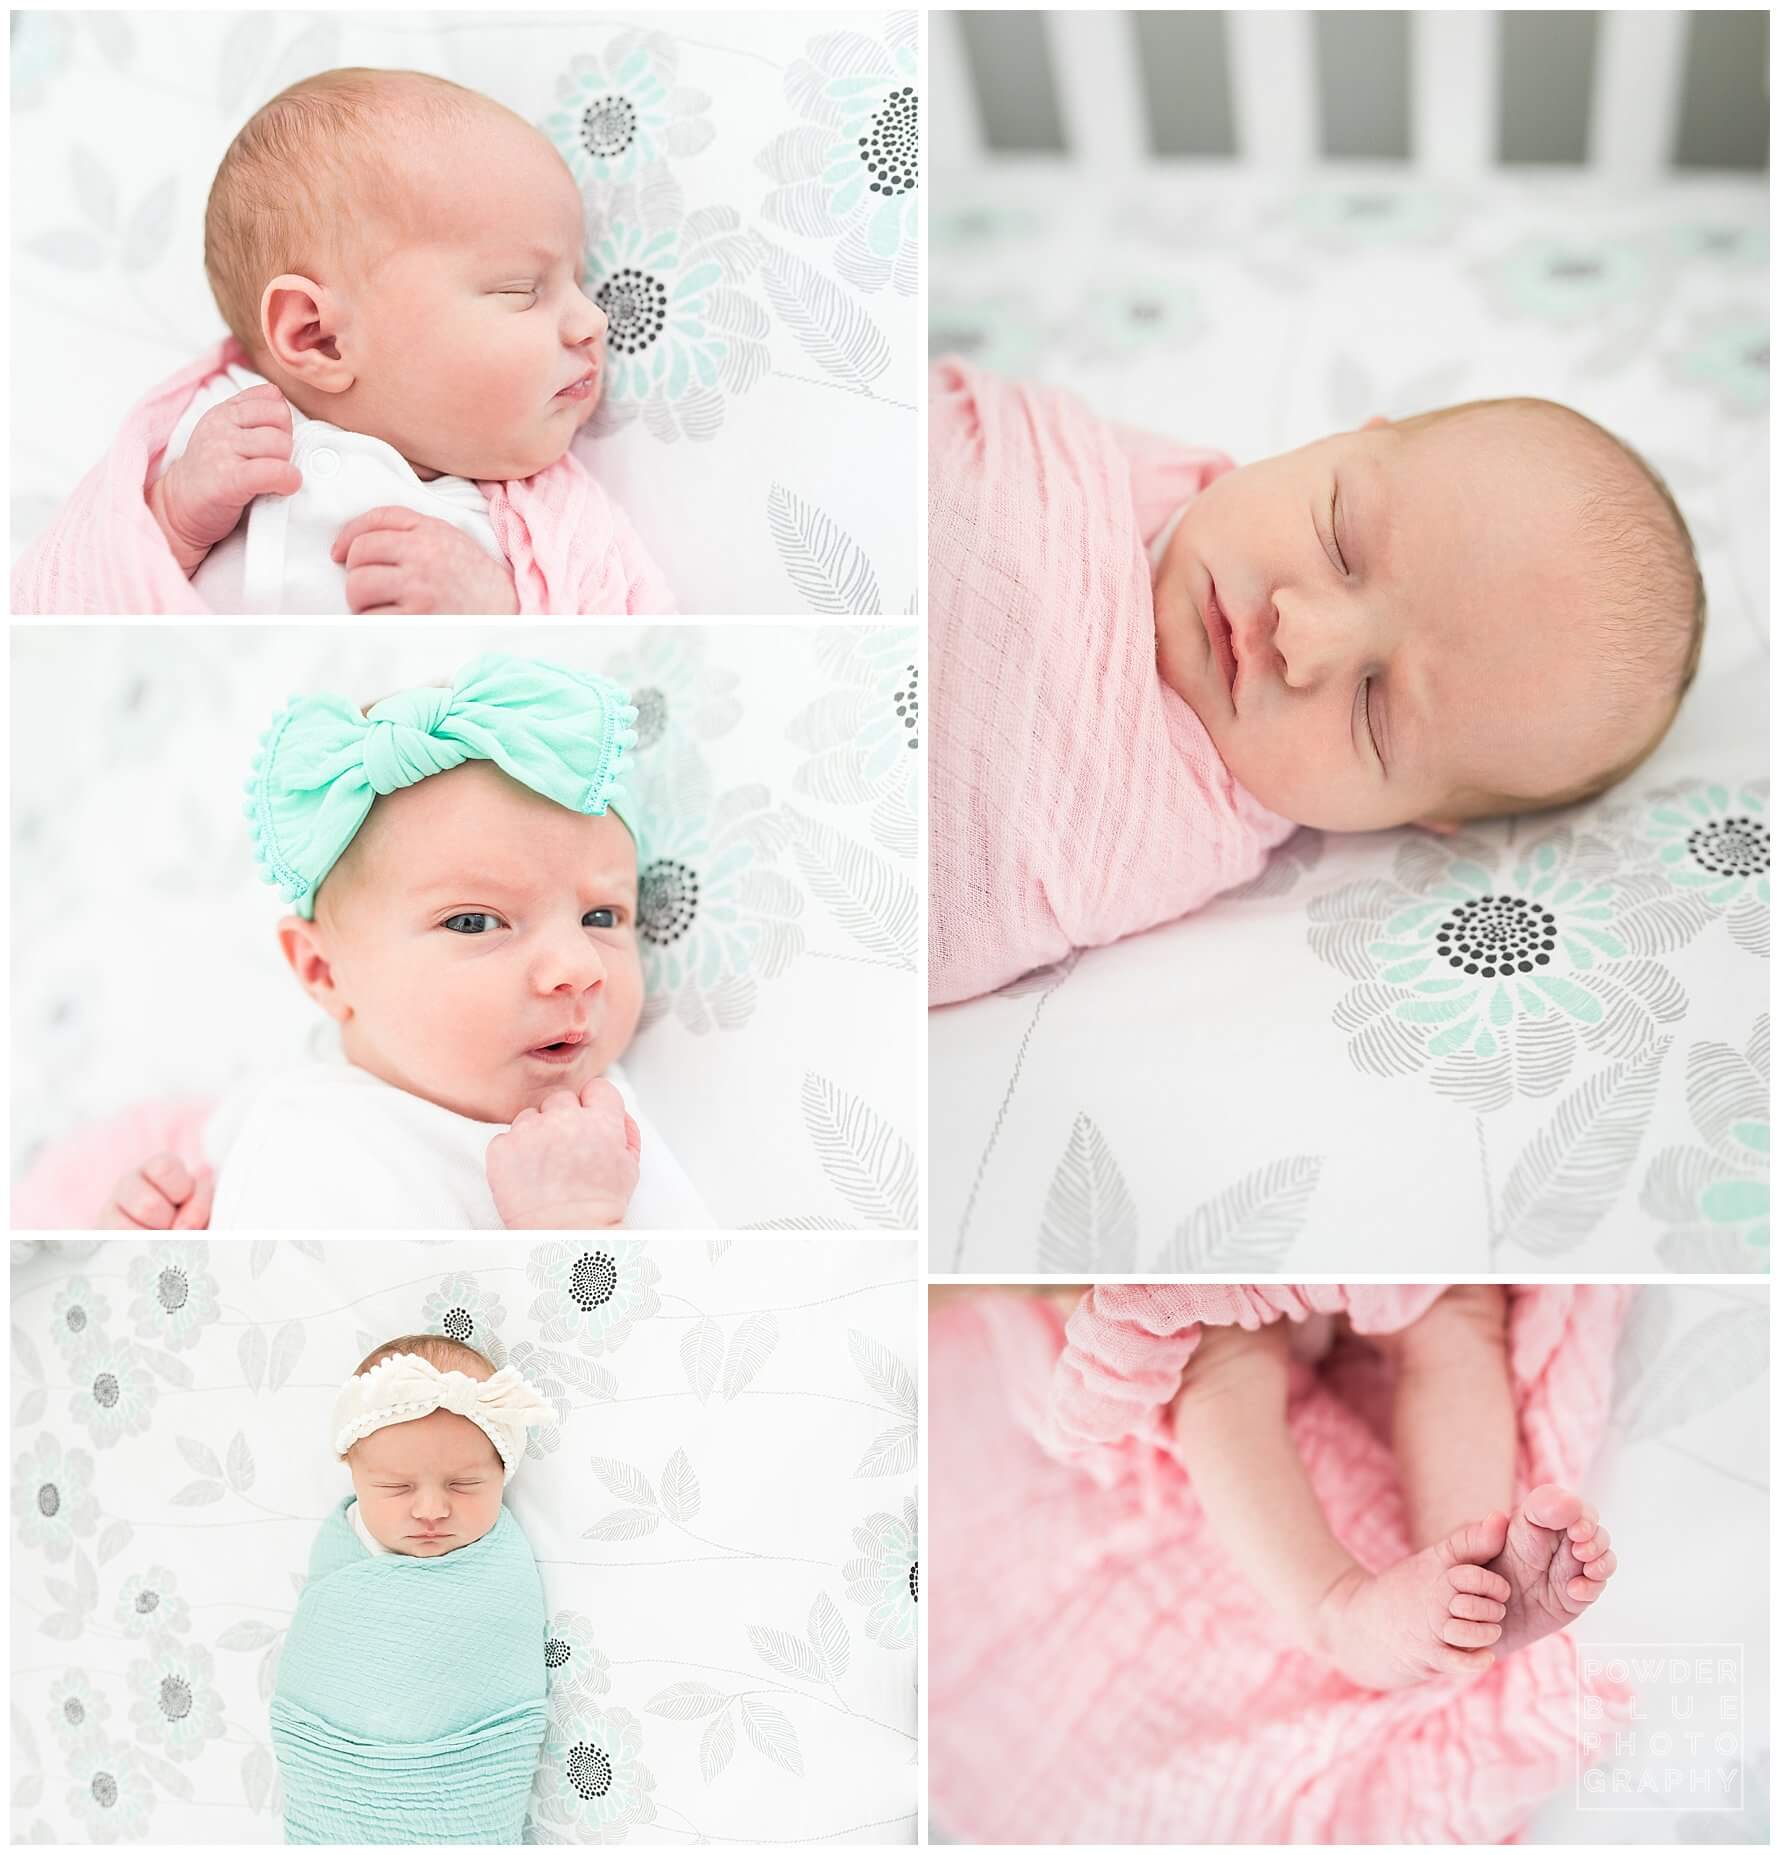 pittsburgh newborn photographer. simple, natural newborn portrait on location. baby girl. in crib. printed sheets. newborn feet. no props.